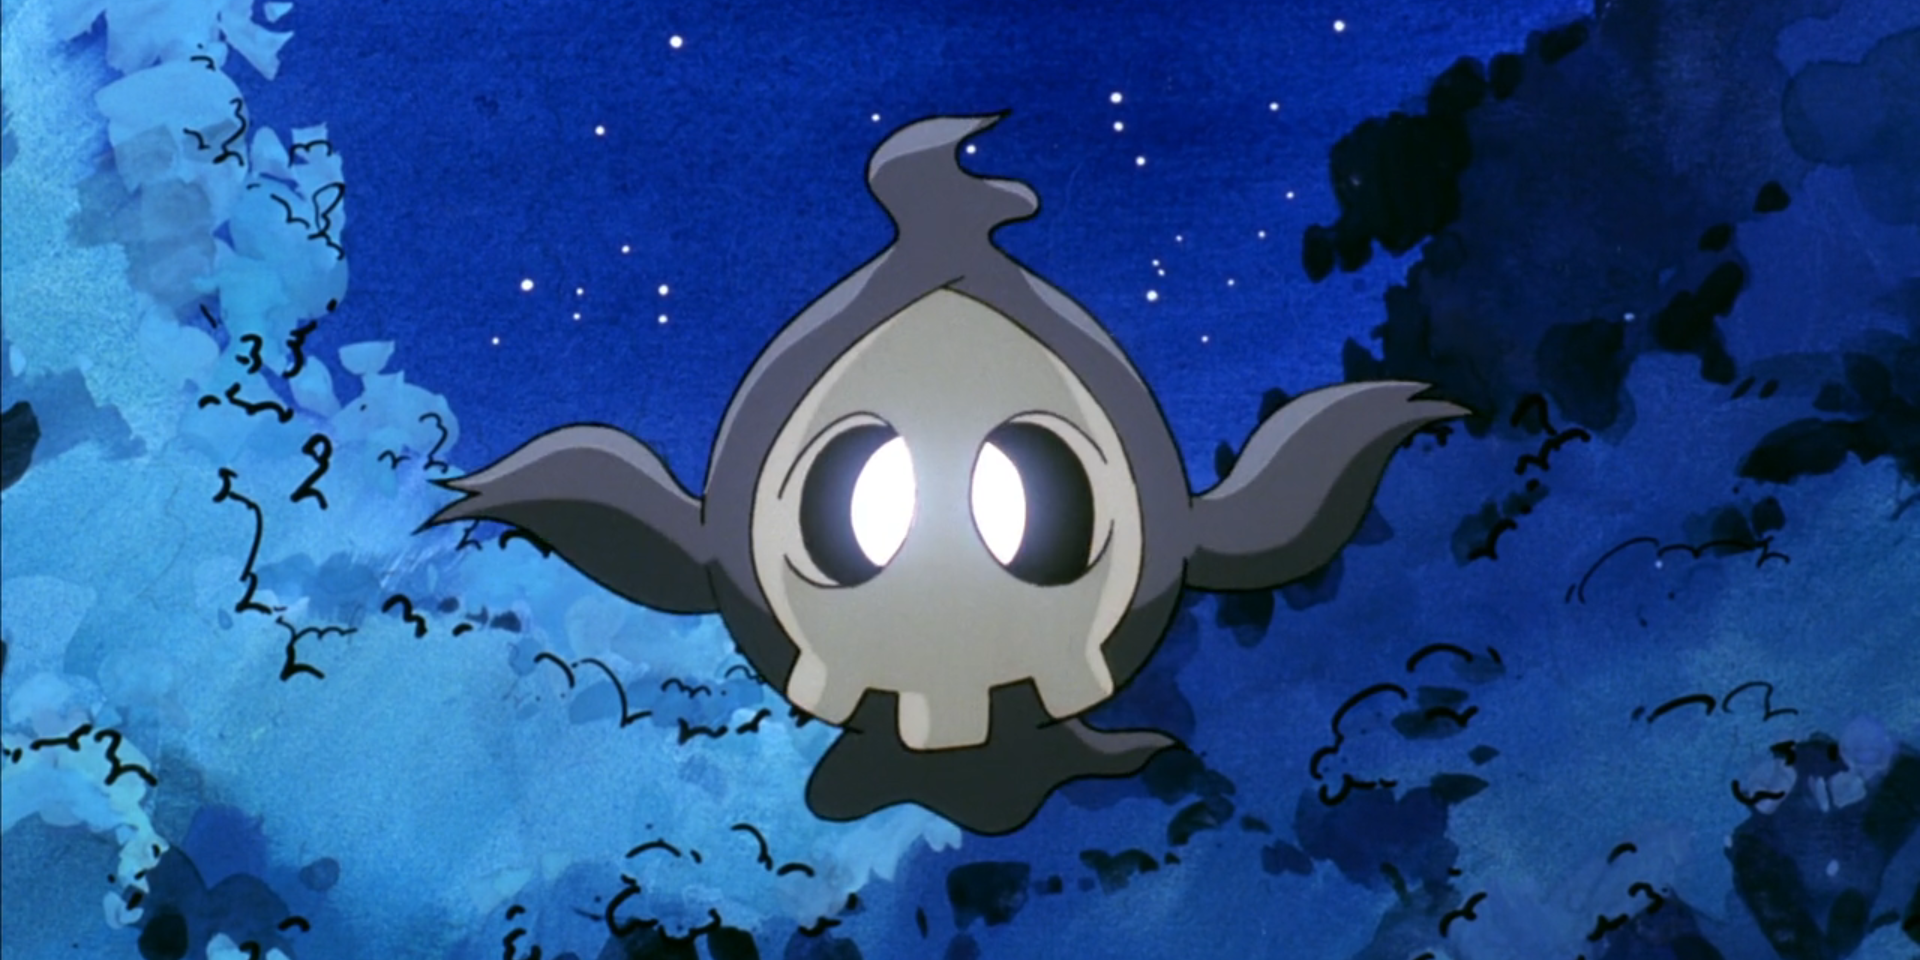 Duskull flying in the night sky from the Pokemon series.